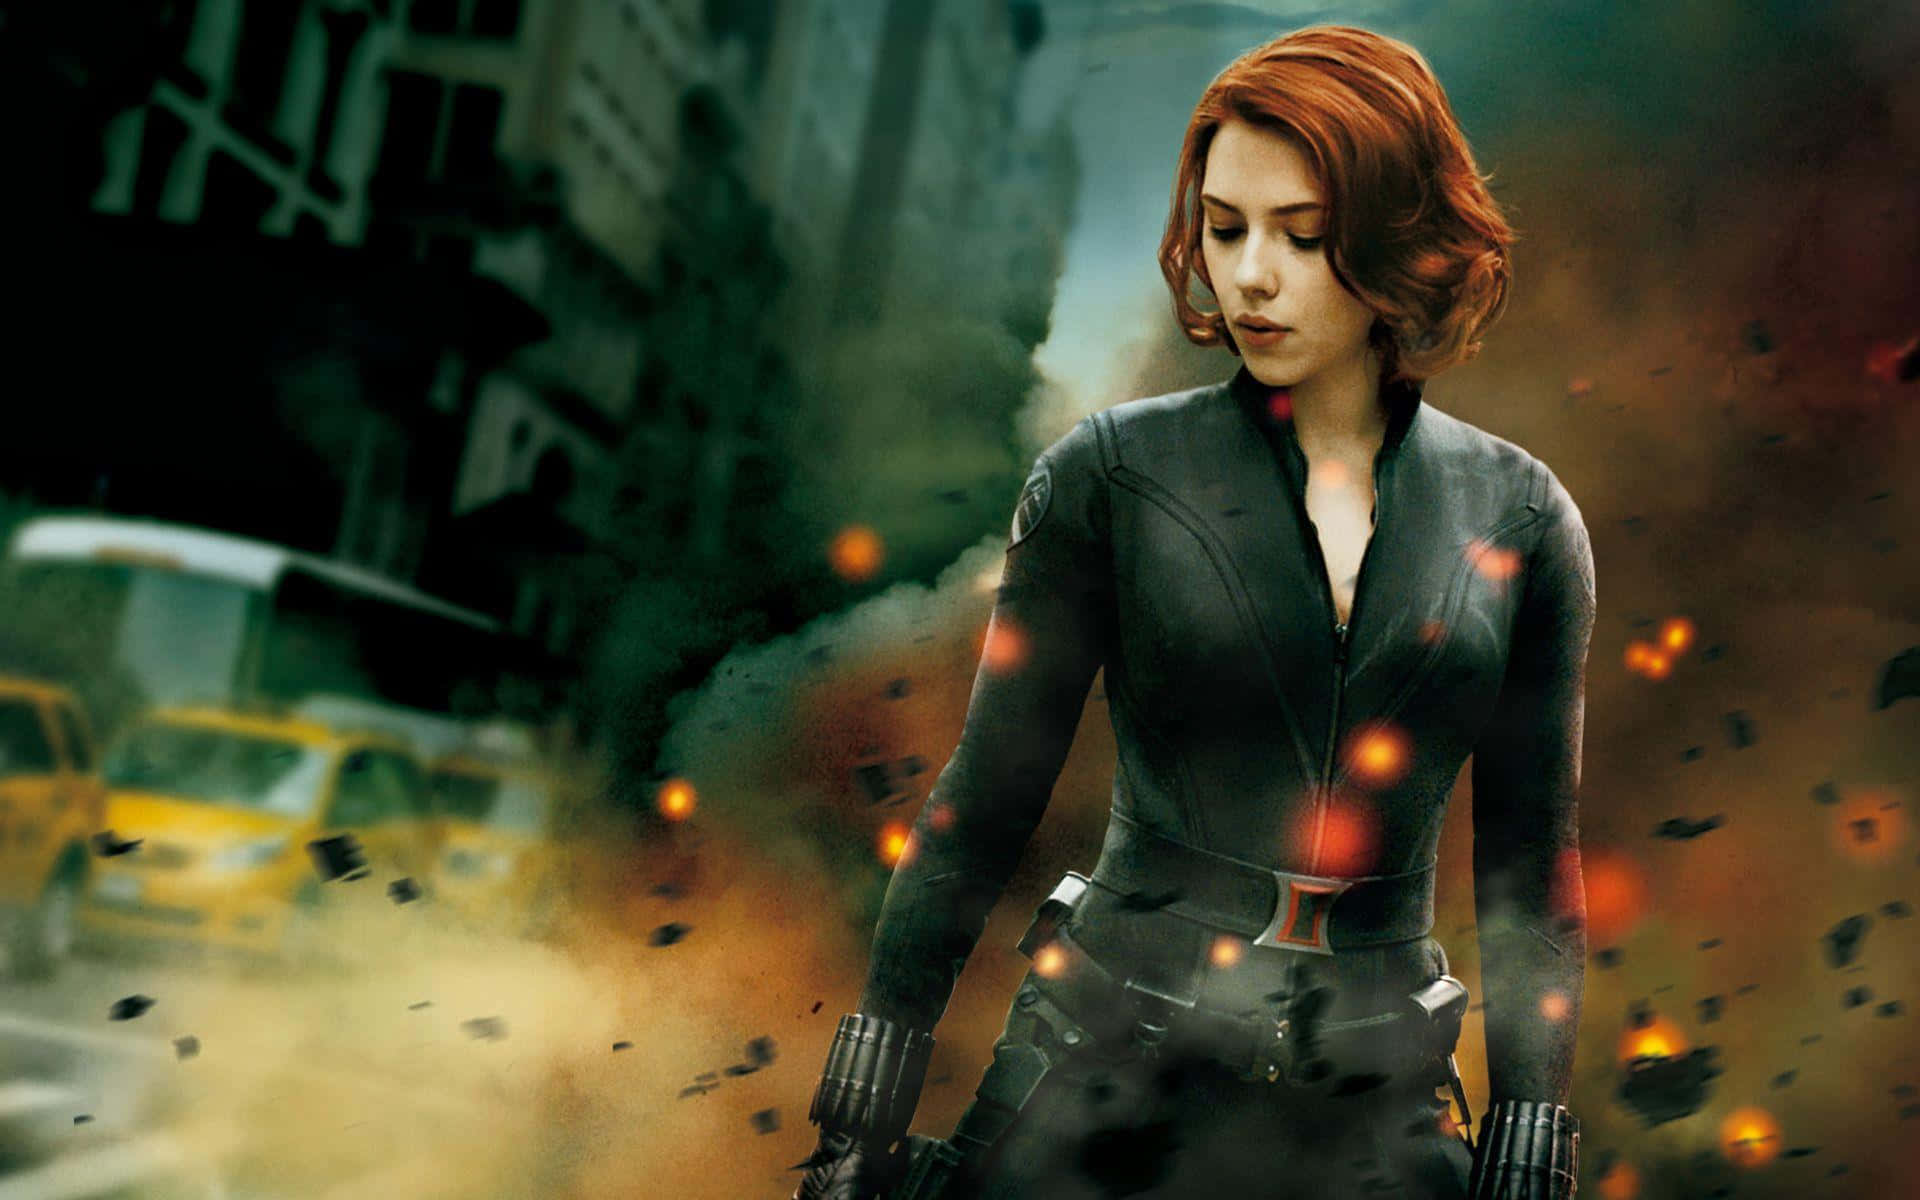 Scarlette Johansson as Black Widow, ready to take on the world.